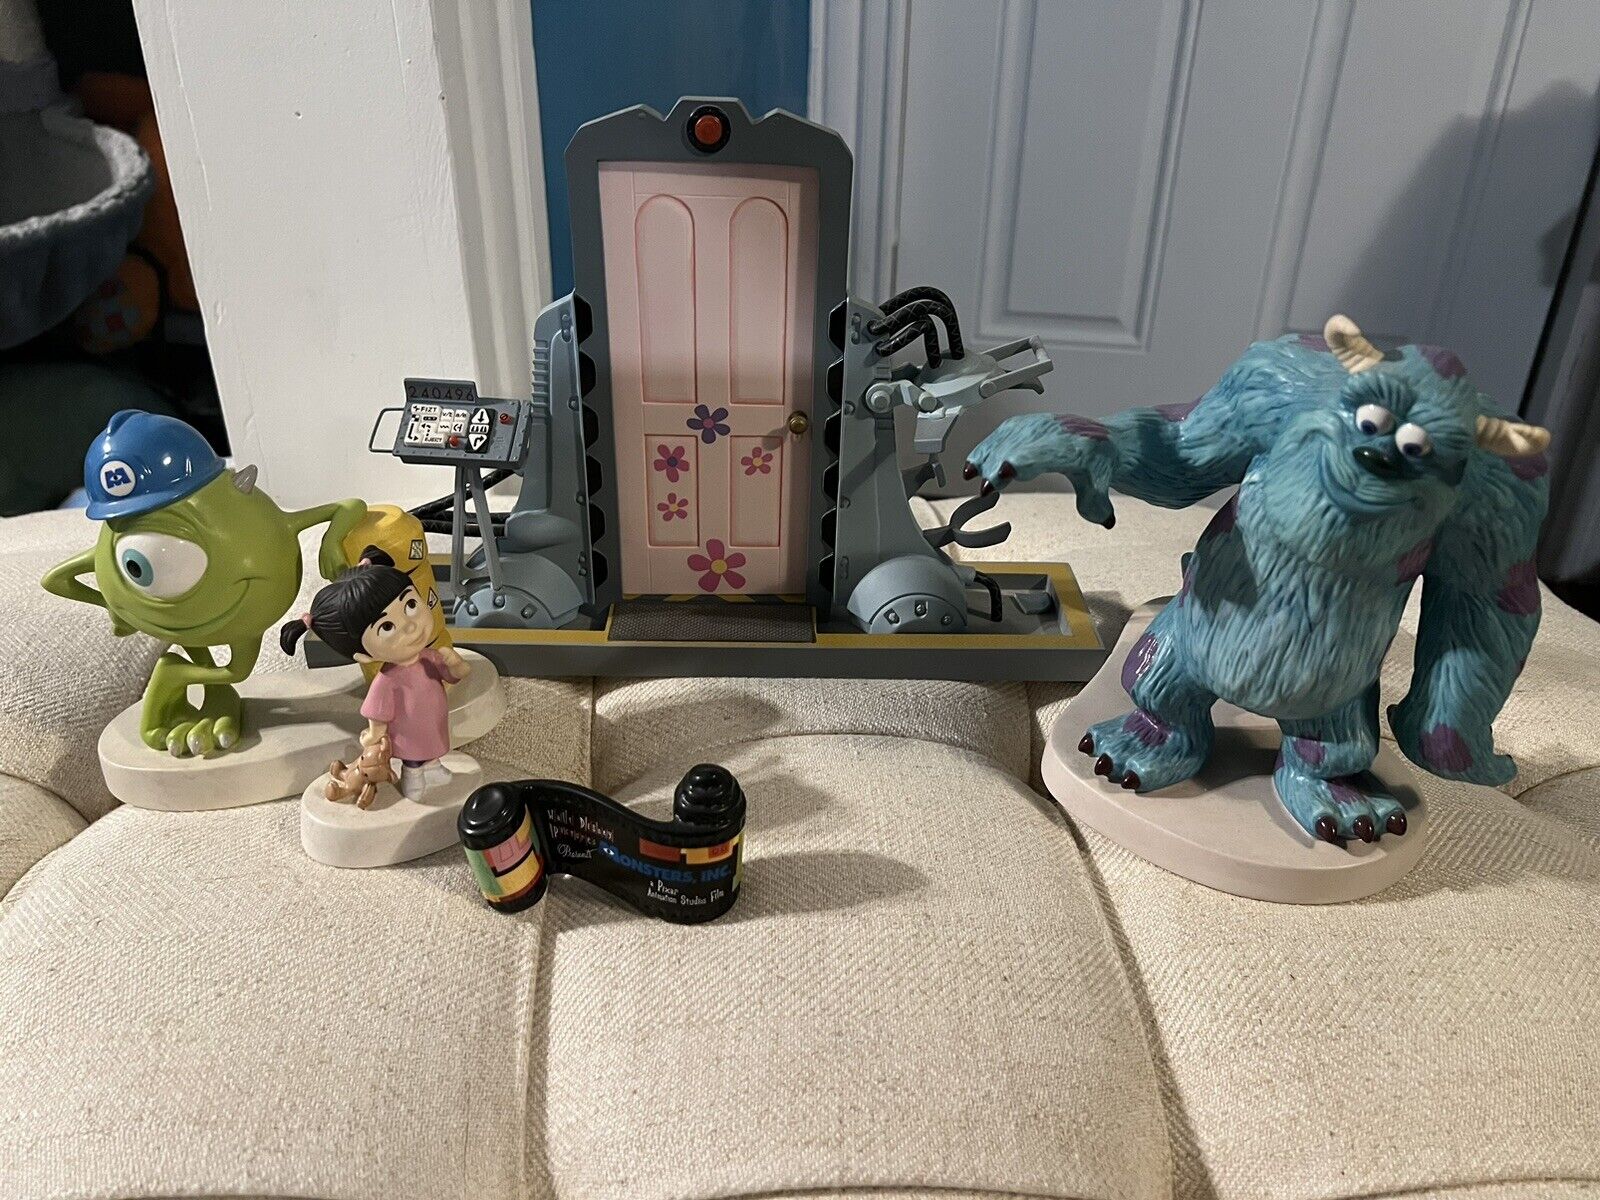 WDCC Monsters Inc. 4-piece set Sulley,  Mike,  Boo, Broken Door Station  Read